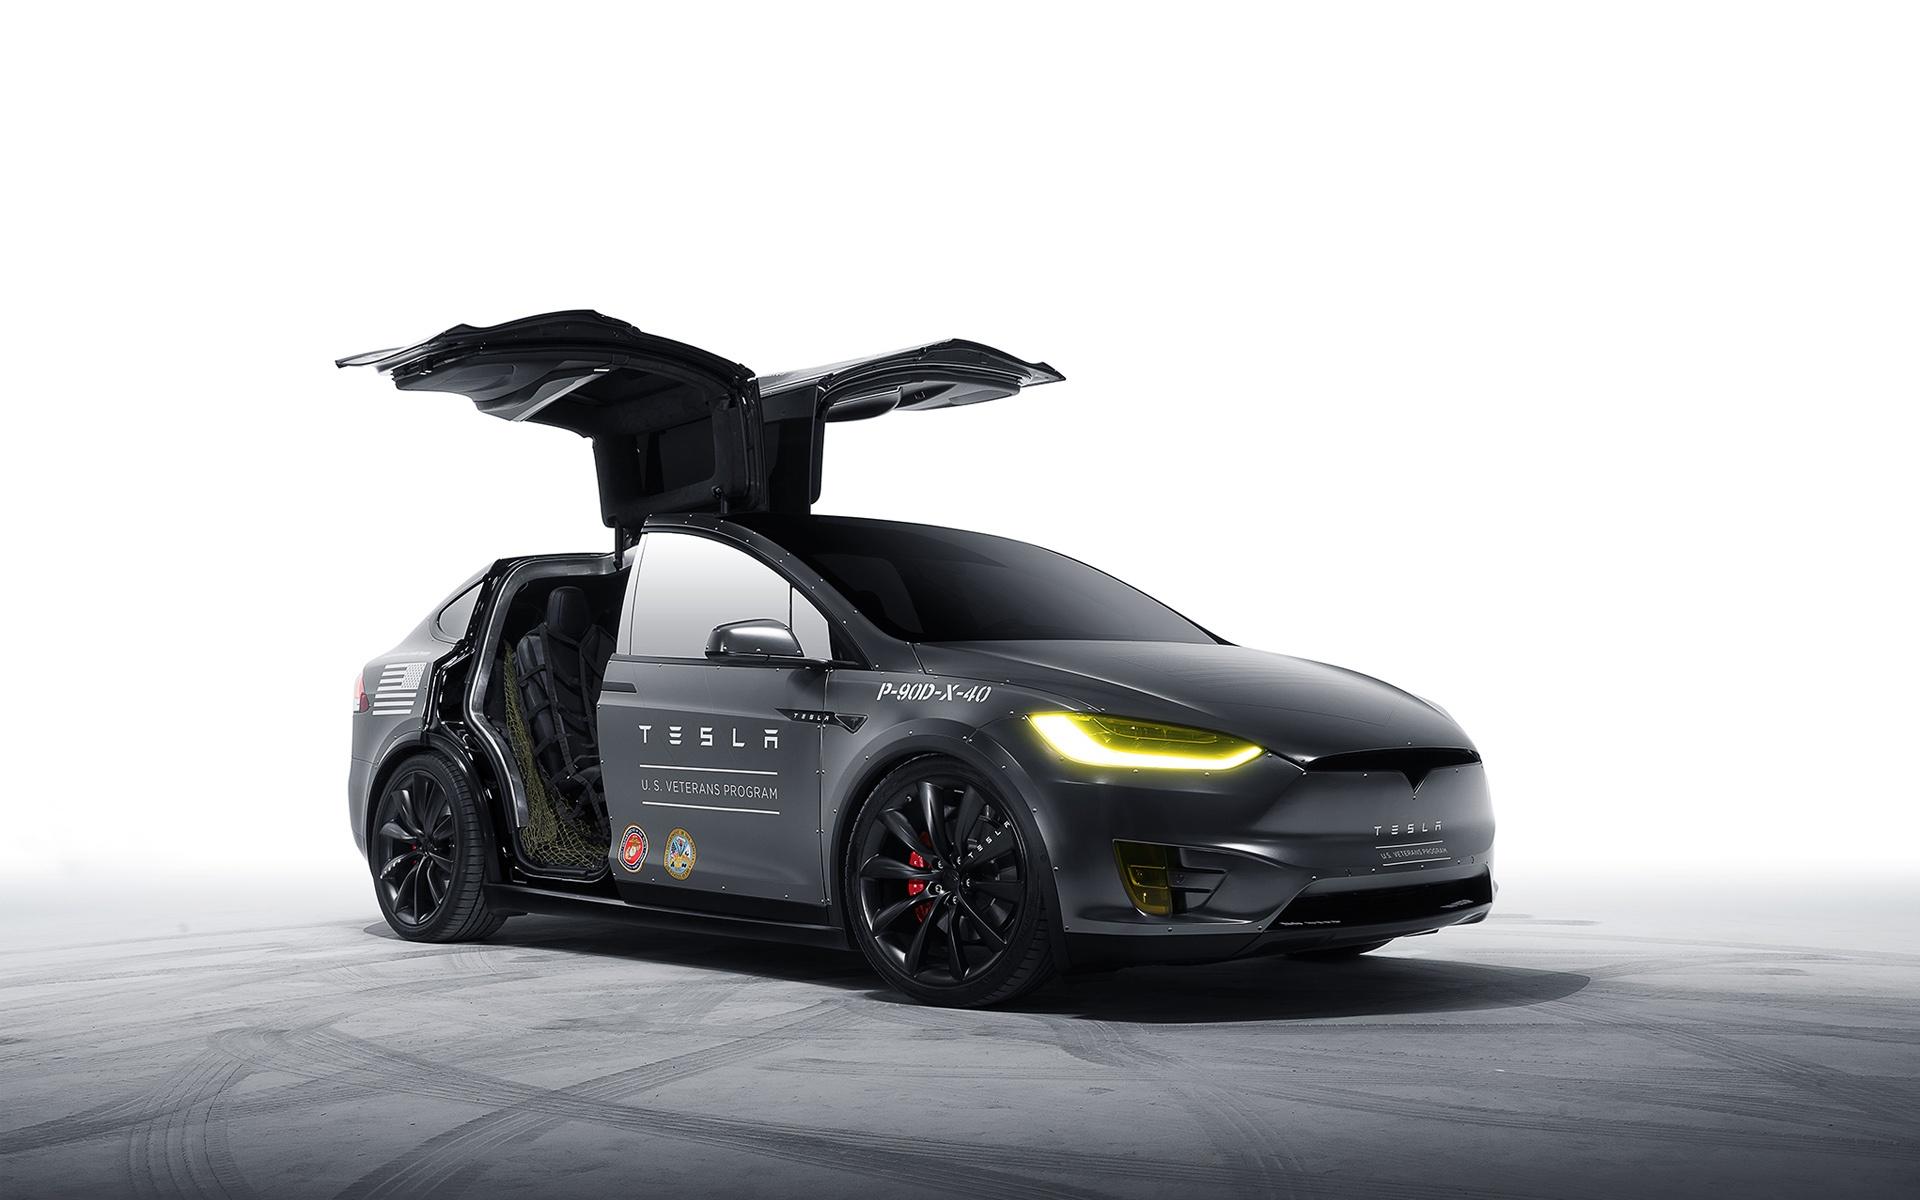 Free download Model X Tesla Motors Wallpapers HD Car Wallpapers [1920x1200] for your Desktop, Mobile & Tablet